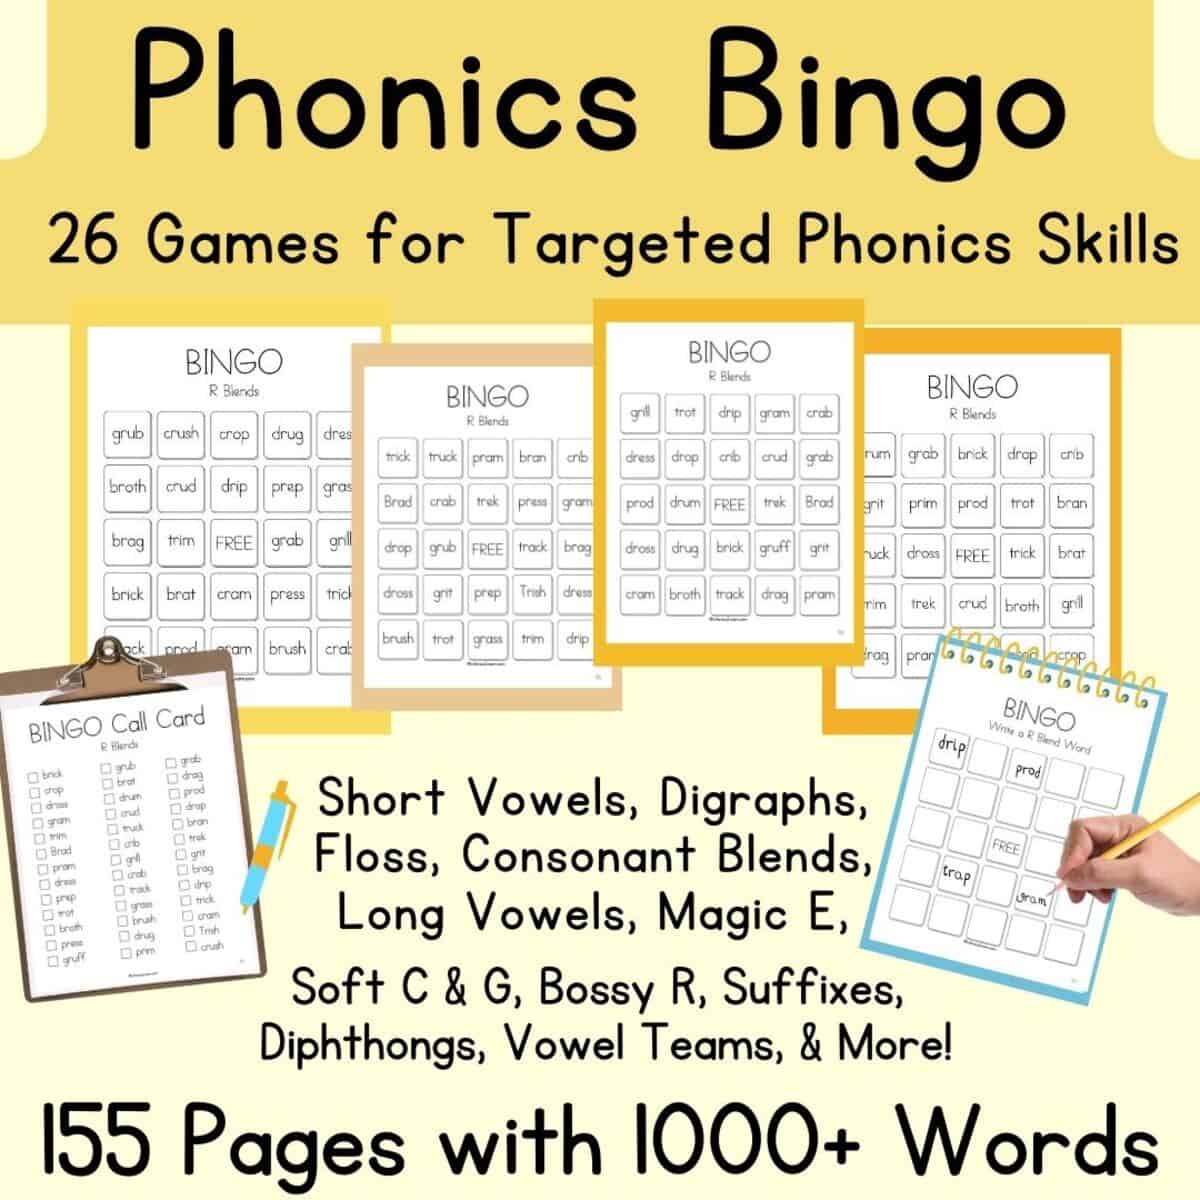 Image showing examples of Phonics Bingo games with 4 Bingo cards, a word list, and Bingo.